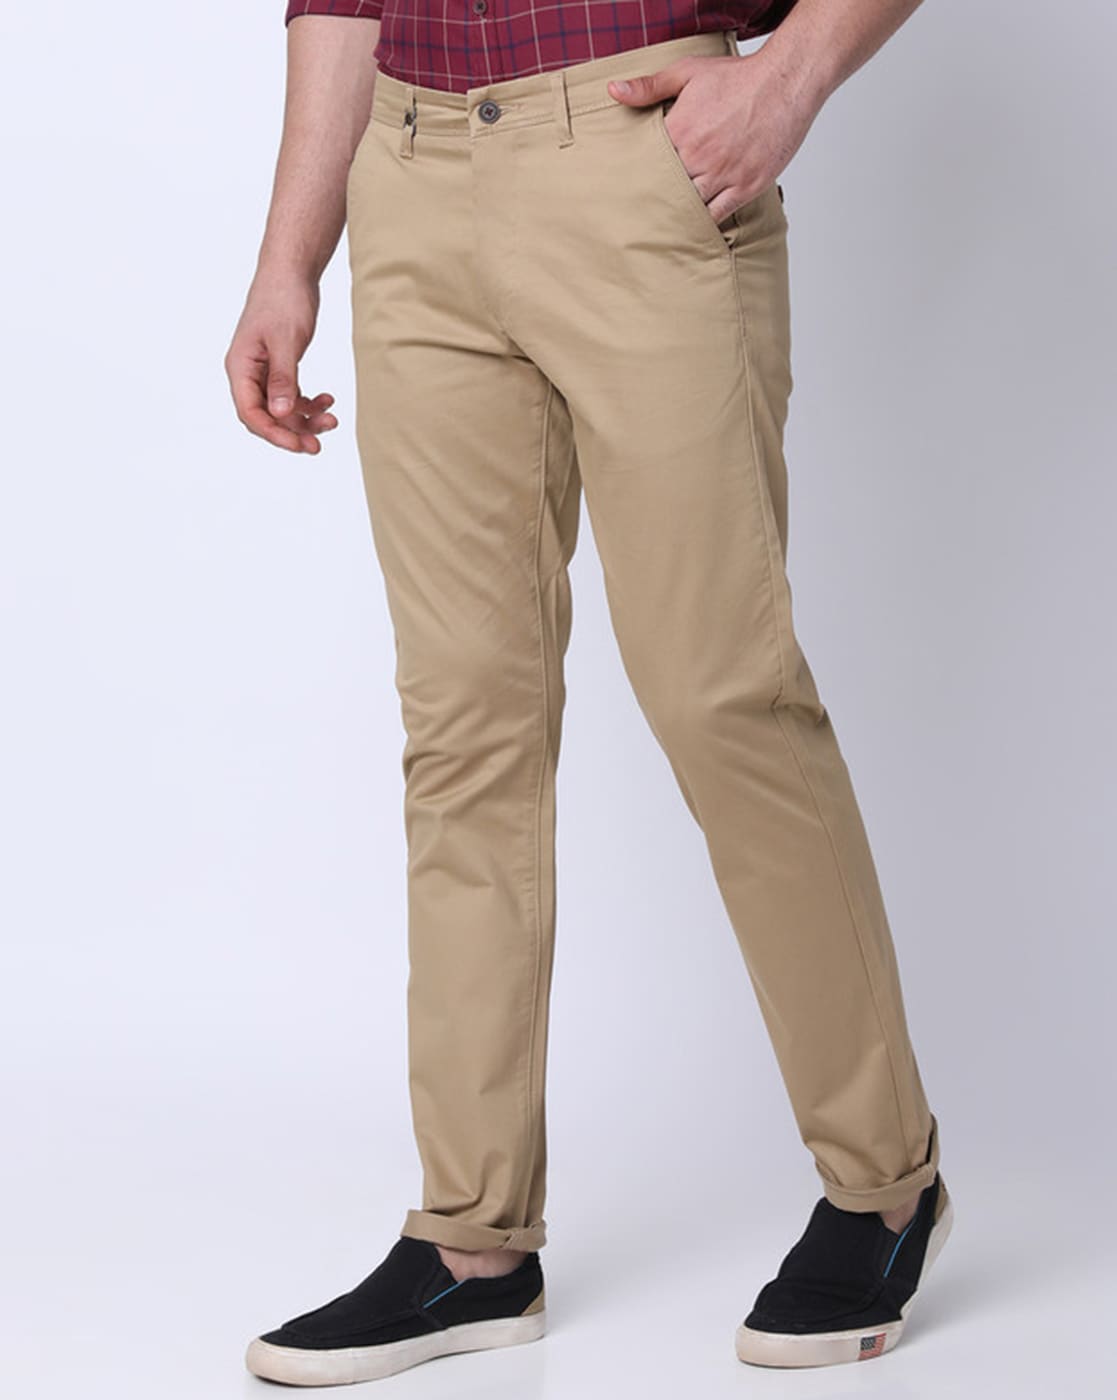 Buy Oxemberg Men's Slim Pants (F6164B_Beige_36) at Amazon.in